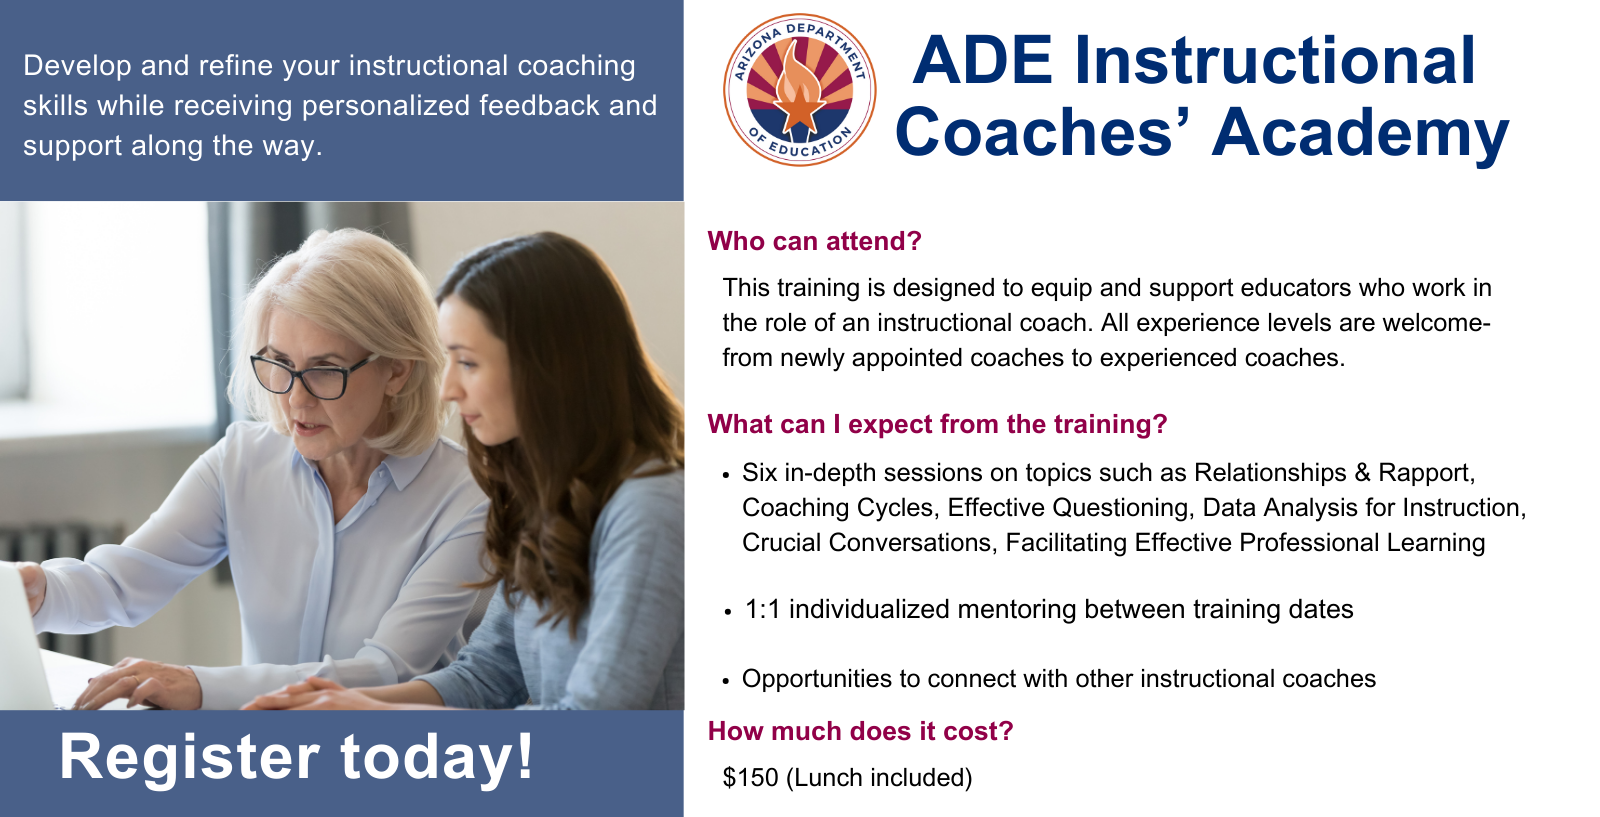 ADE Instructional Coaches' Academy